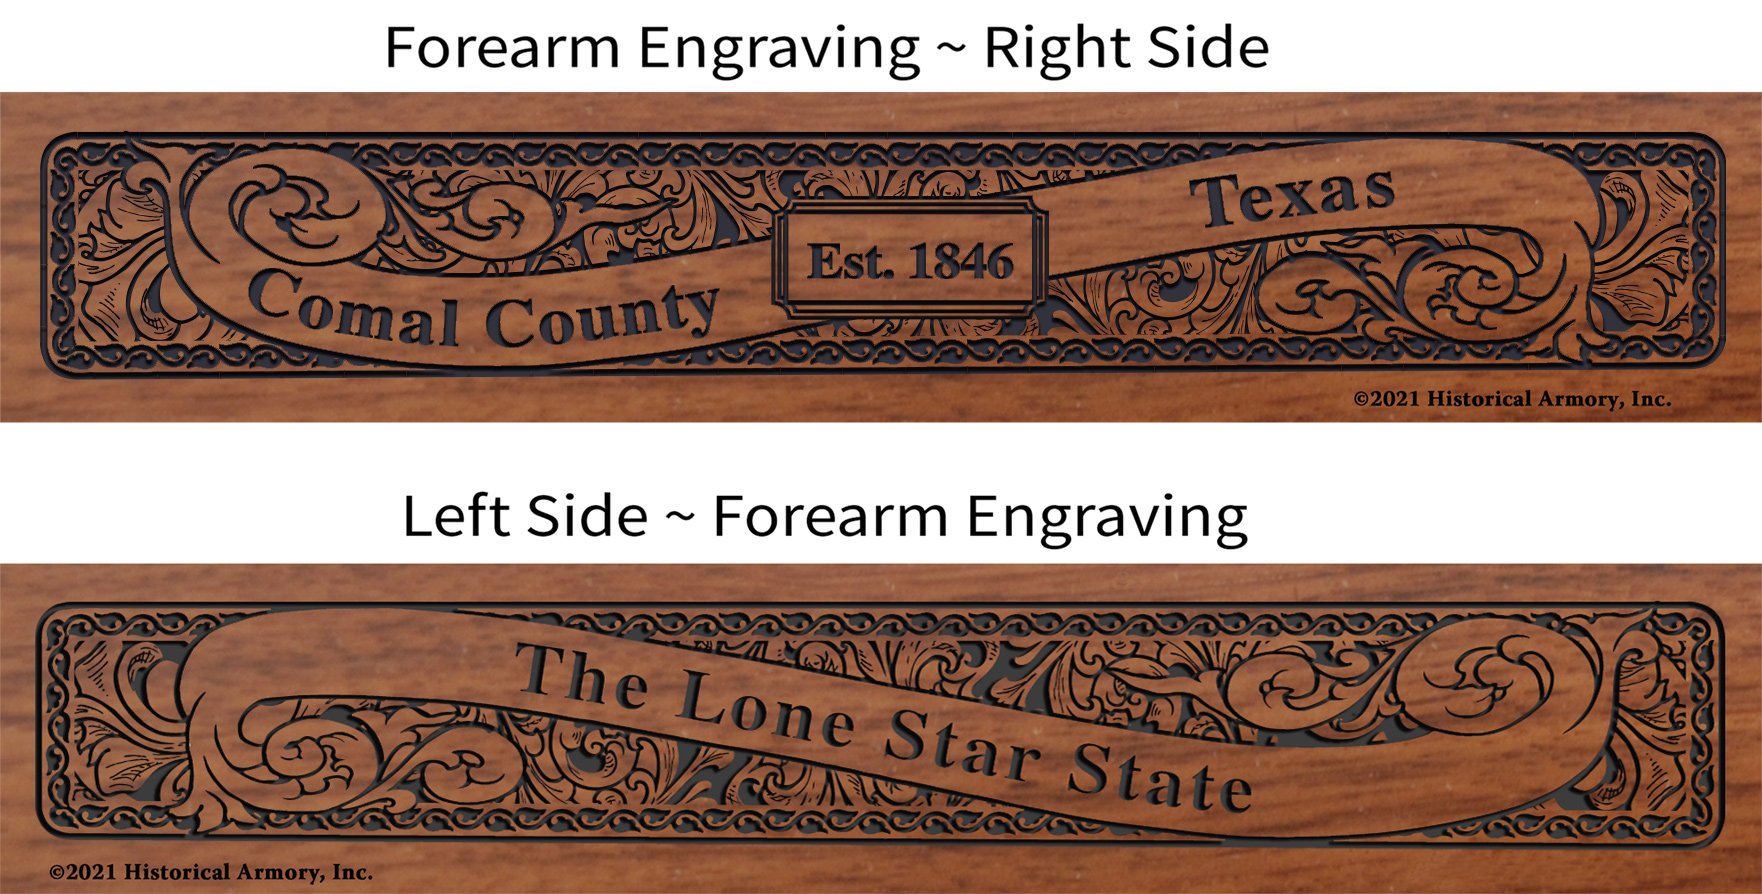 Comal County Texas Establishment and Motto History Engraved Rifle Forearm